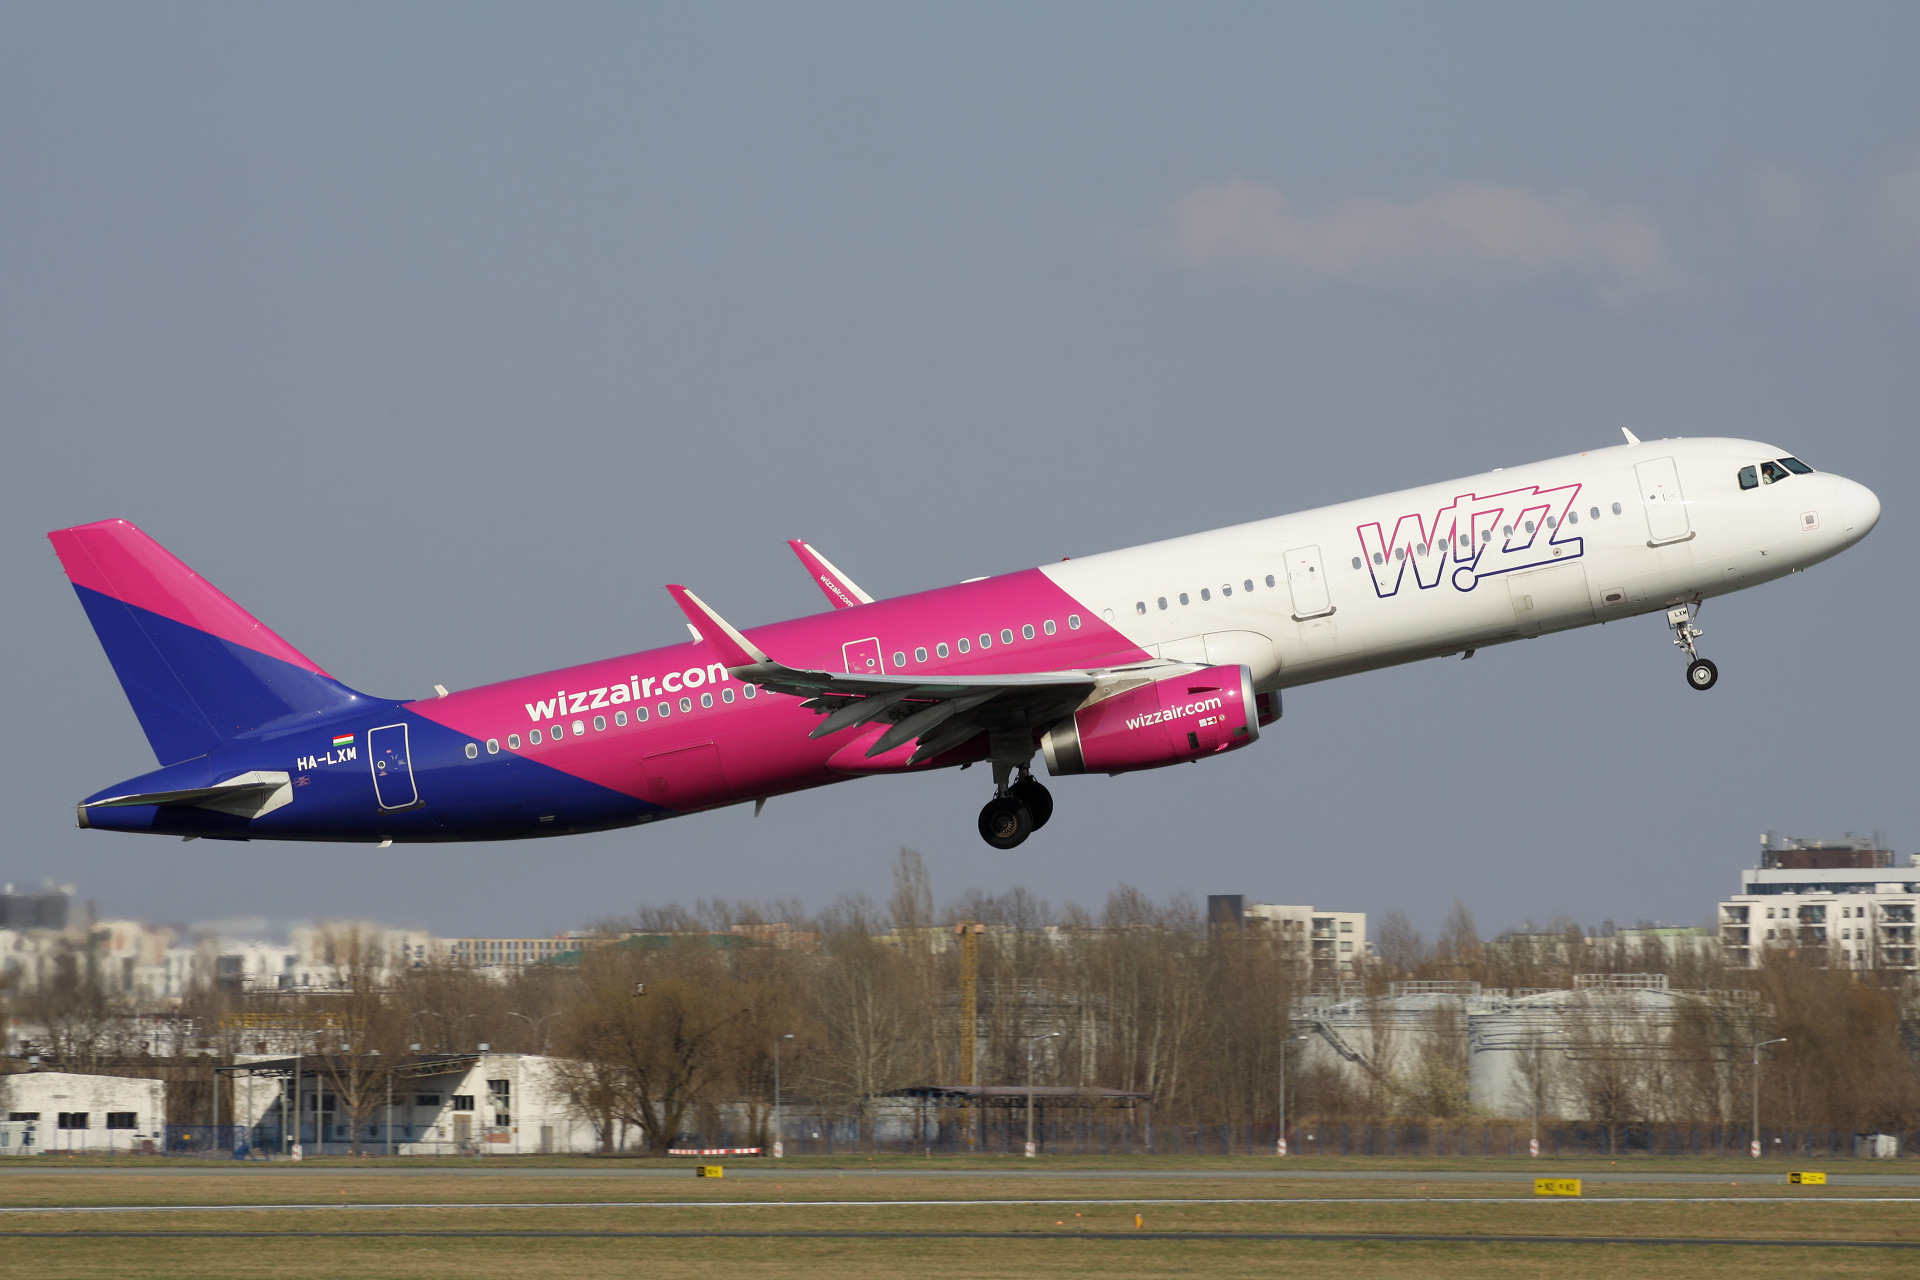 HA-LXM (Aircraft » EPWA Spotting » Airbus A321-200 » Wizz Air)